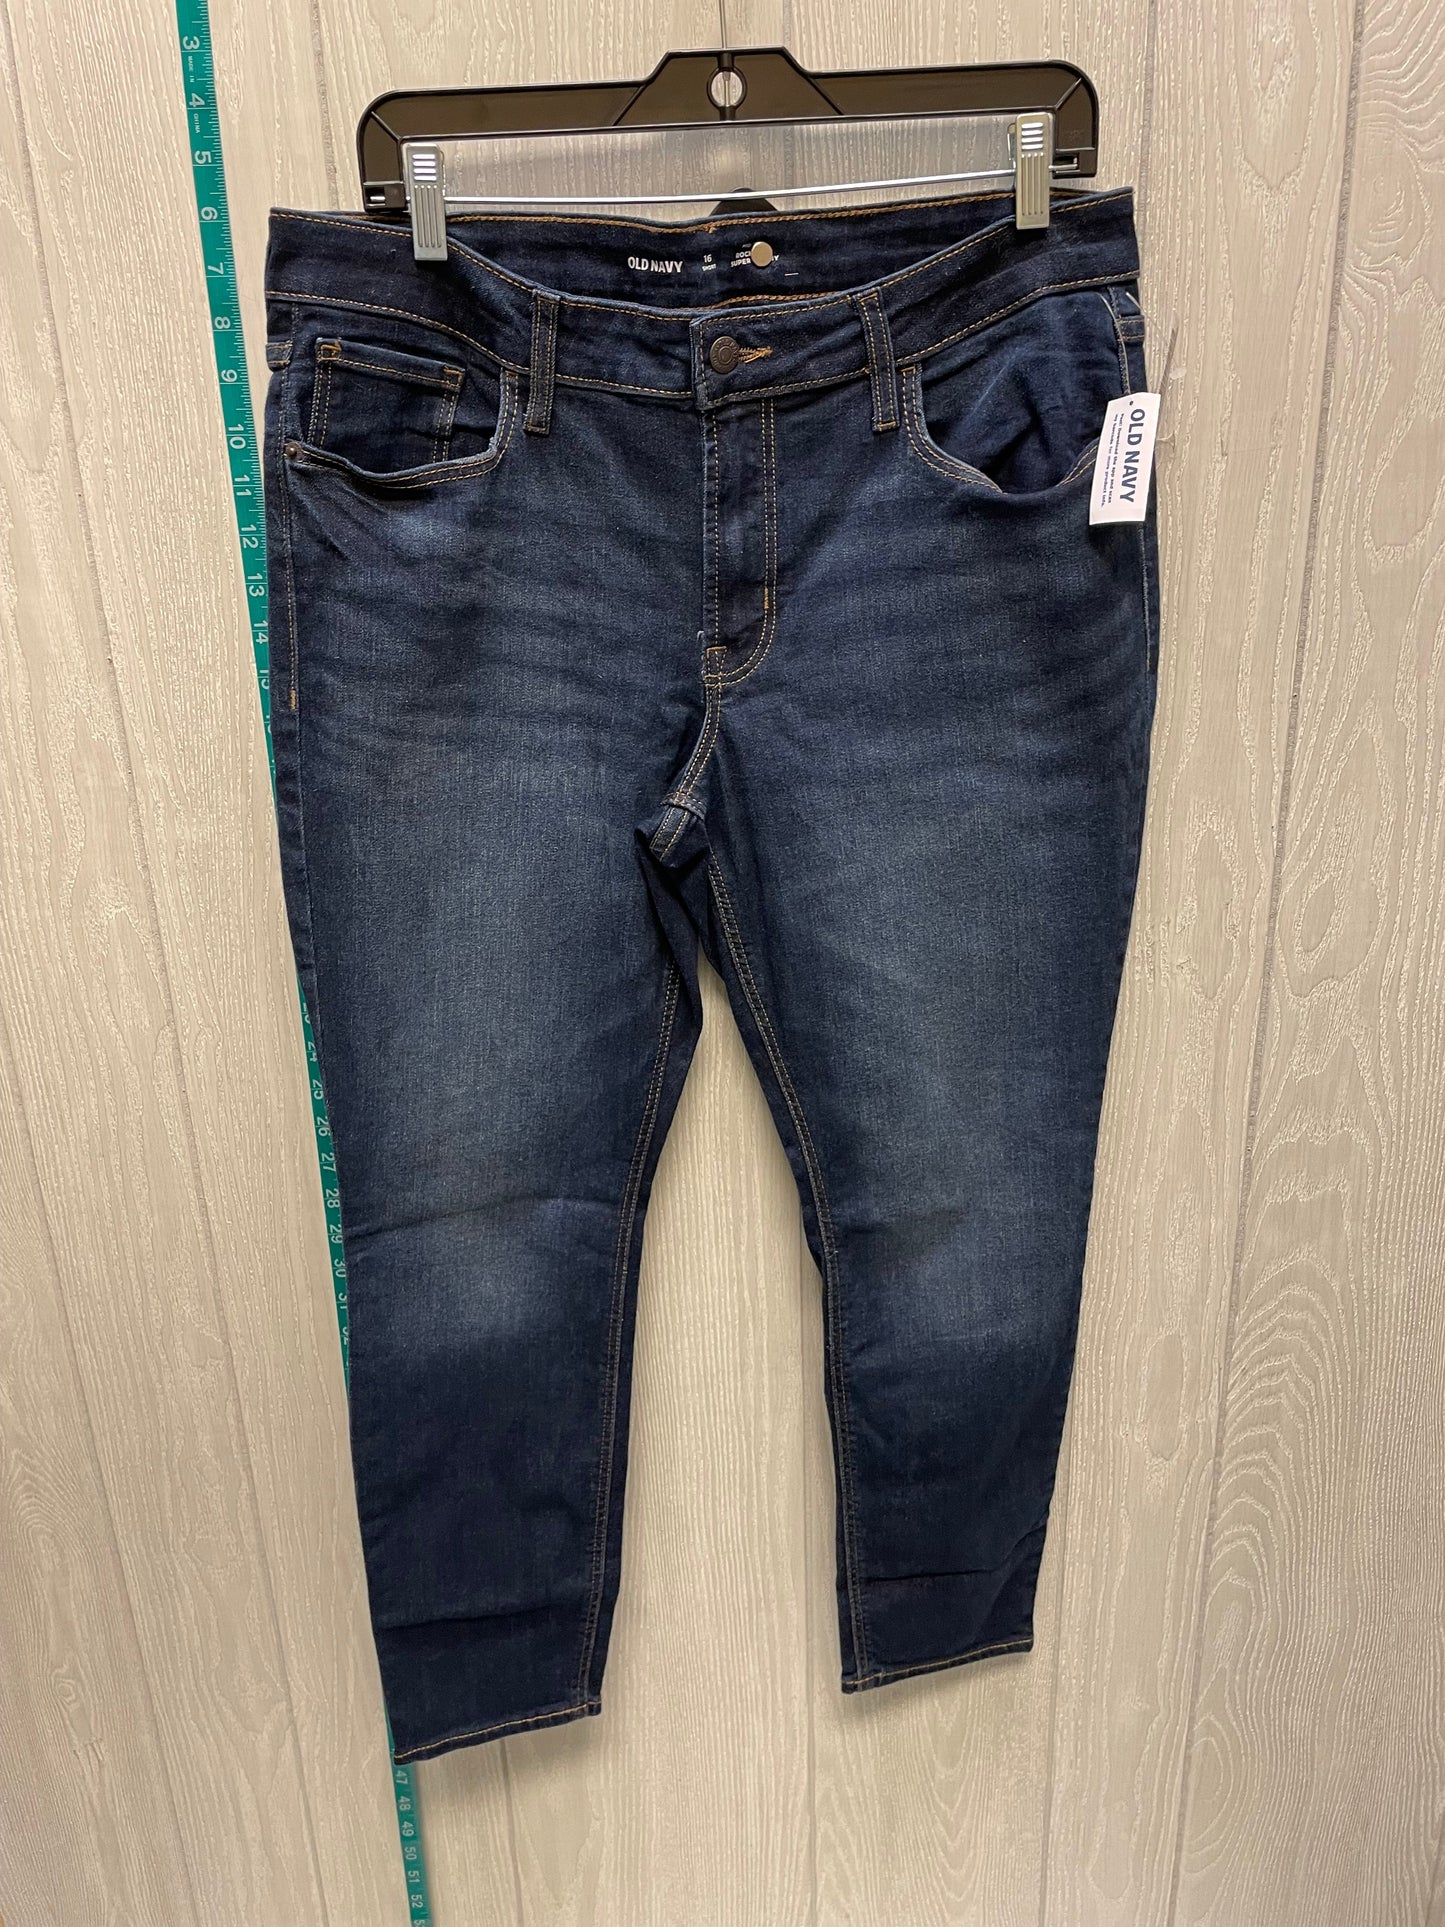 Blue Denim Jeans Skinny Old Navy, Size 16